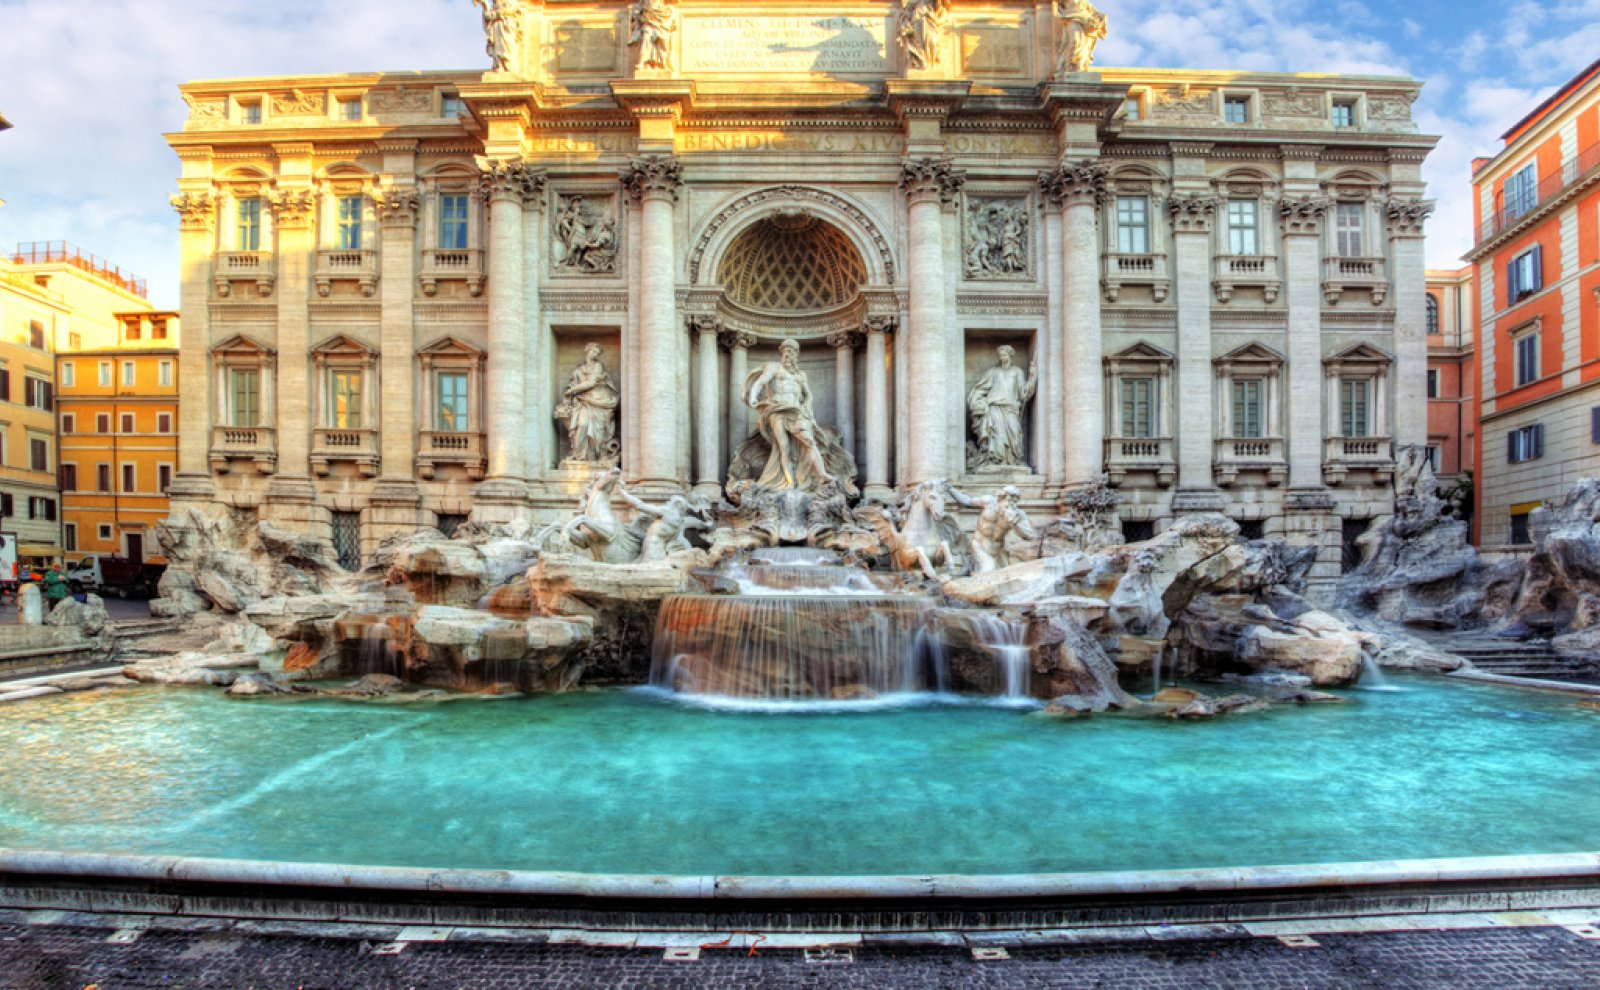 2000x1150px 579.96 KB Trevi Fountain